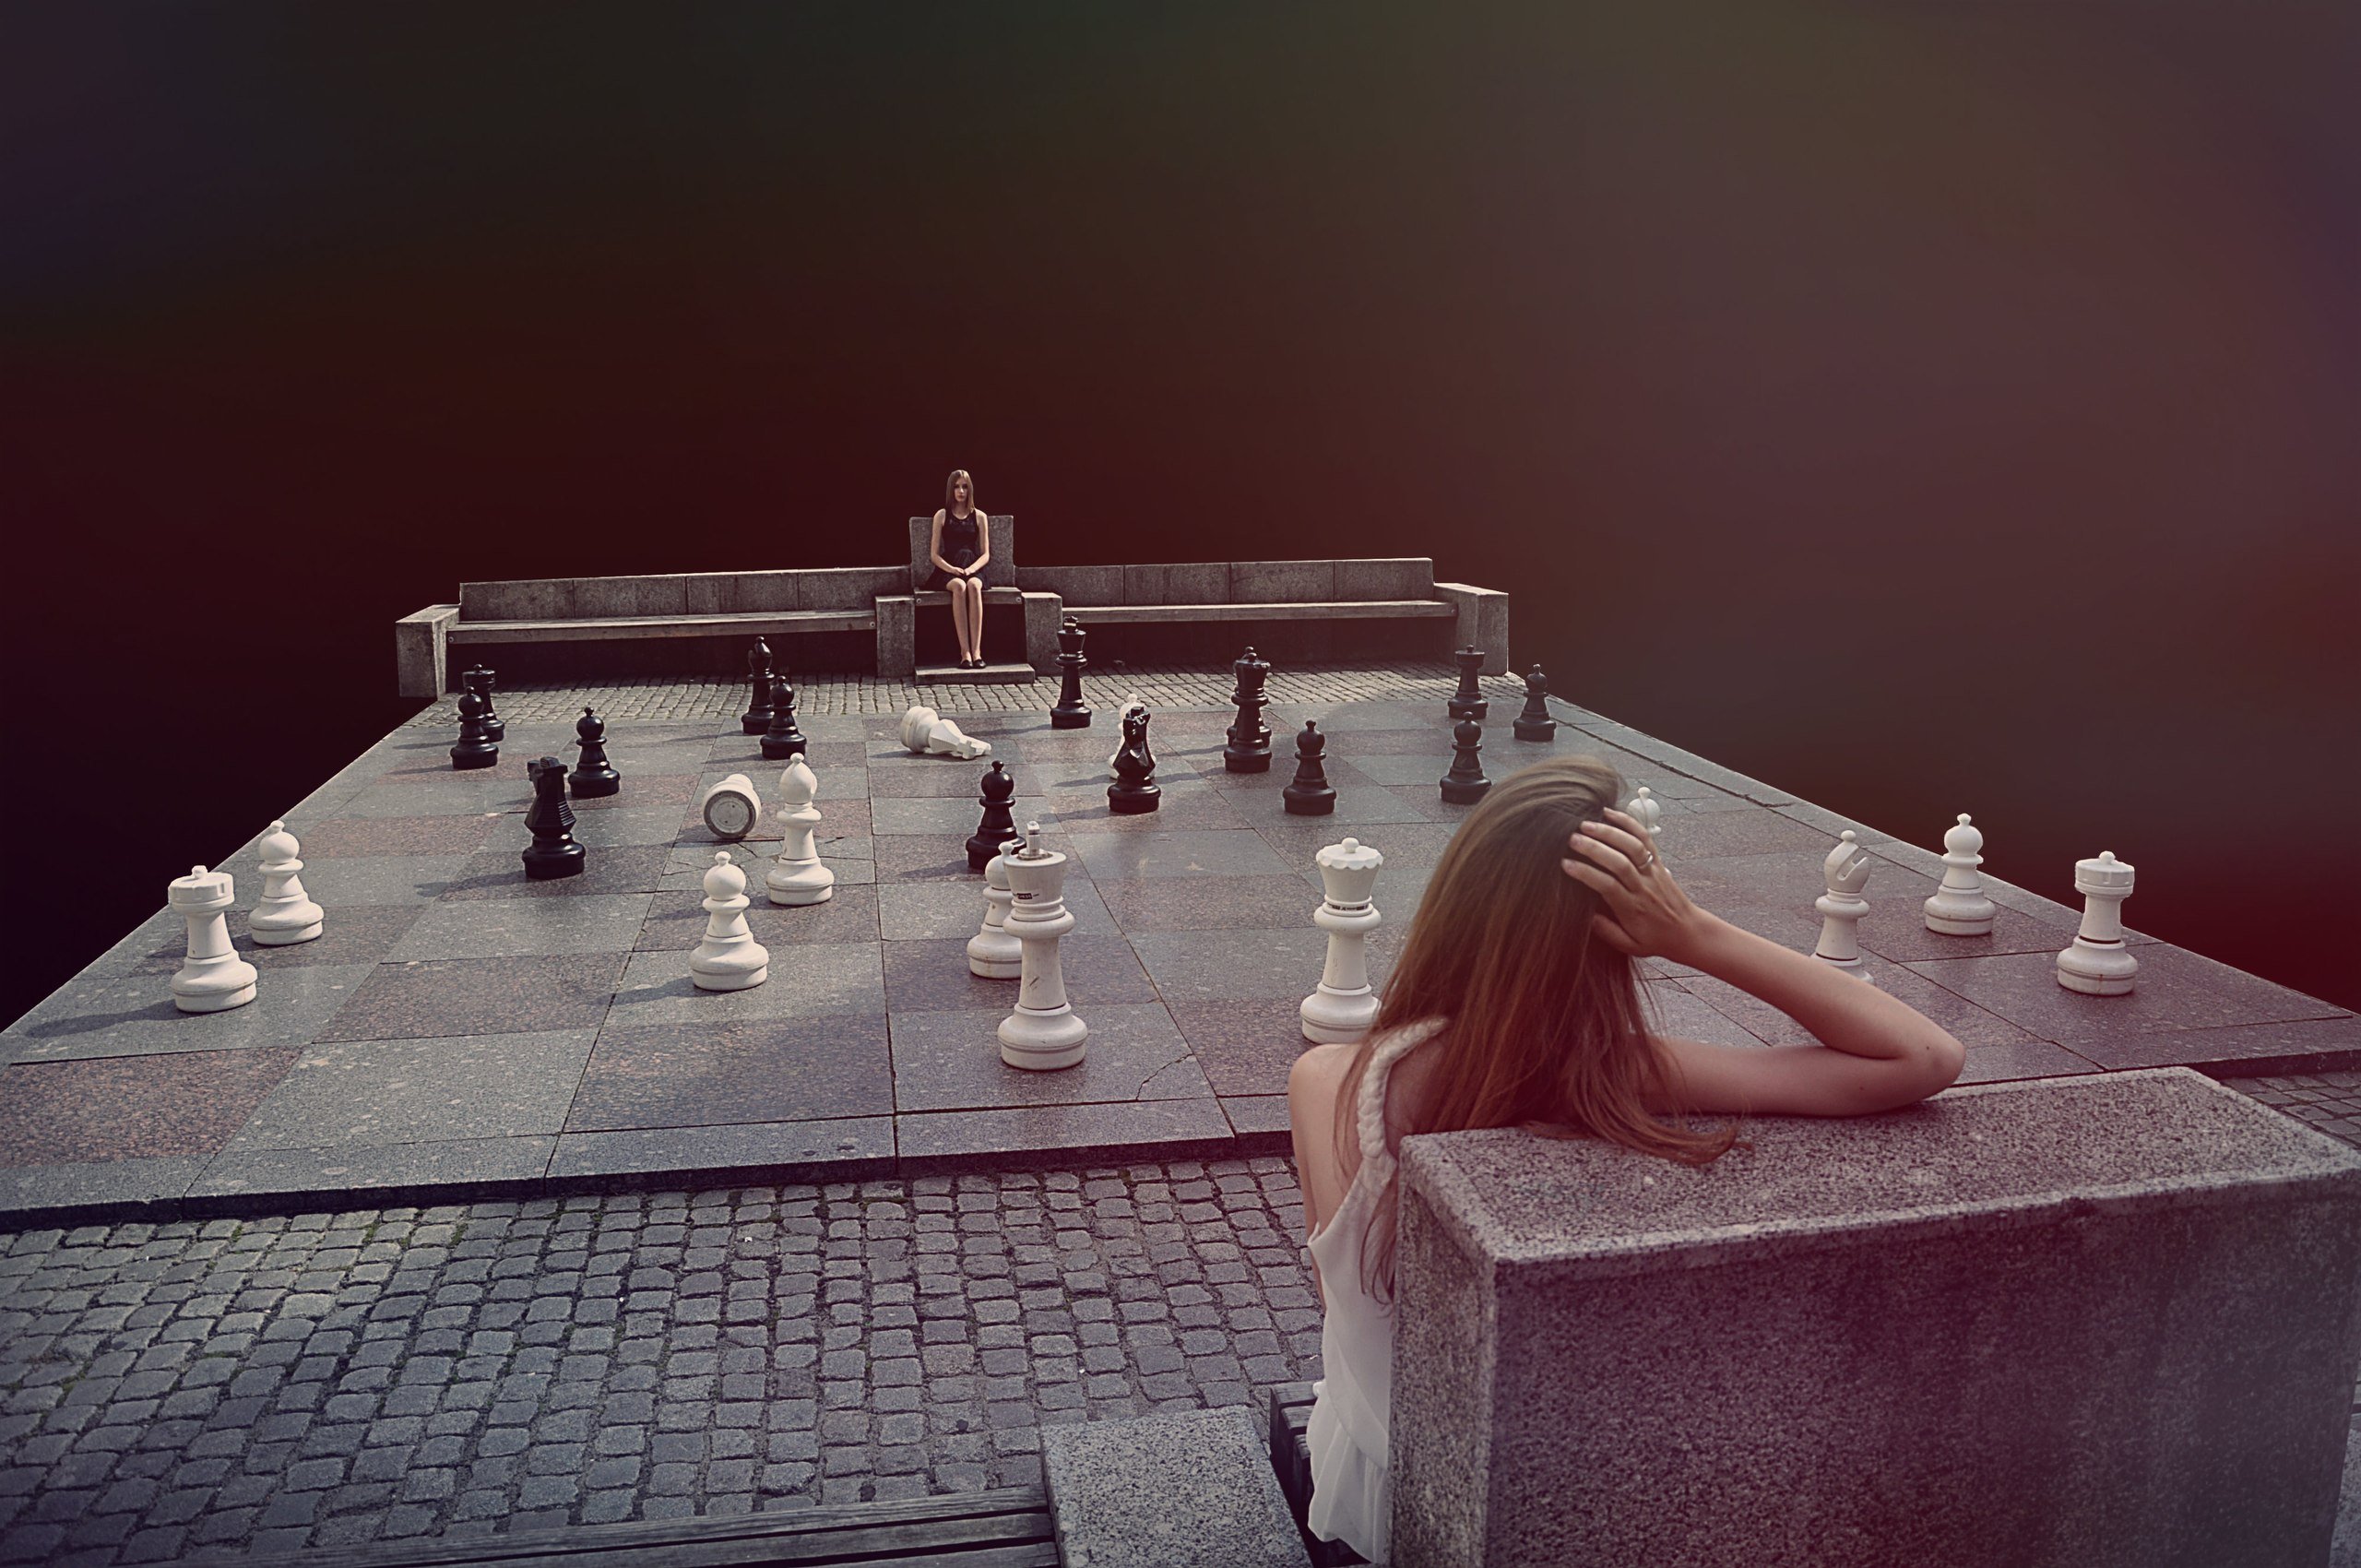 На шахматной доске осталось 5. Женщина на шахматной доске. Фотосессия на шахматной доске. Девушка и шахматы. Женщина на шахматном дасске.